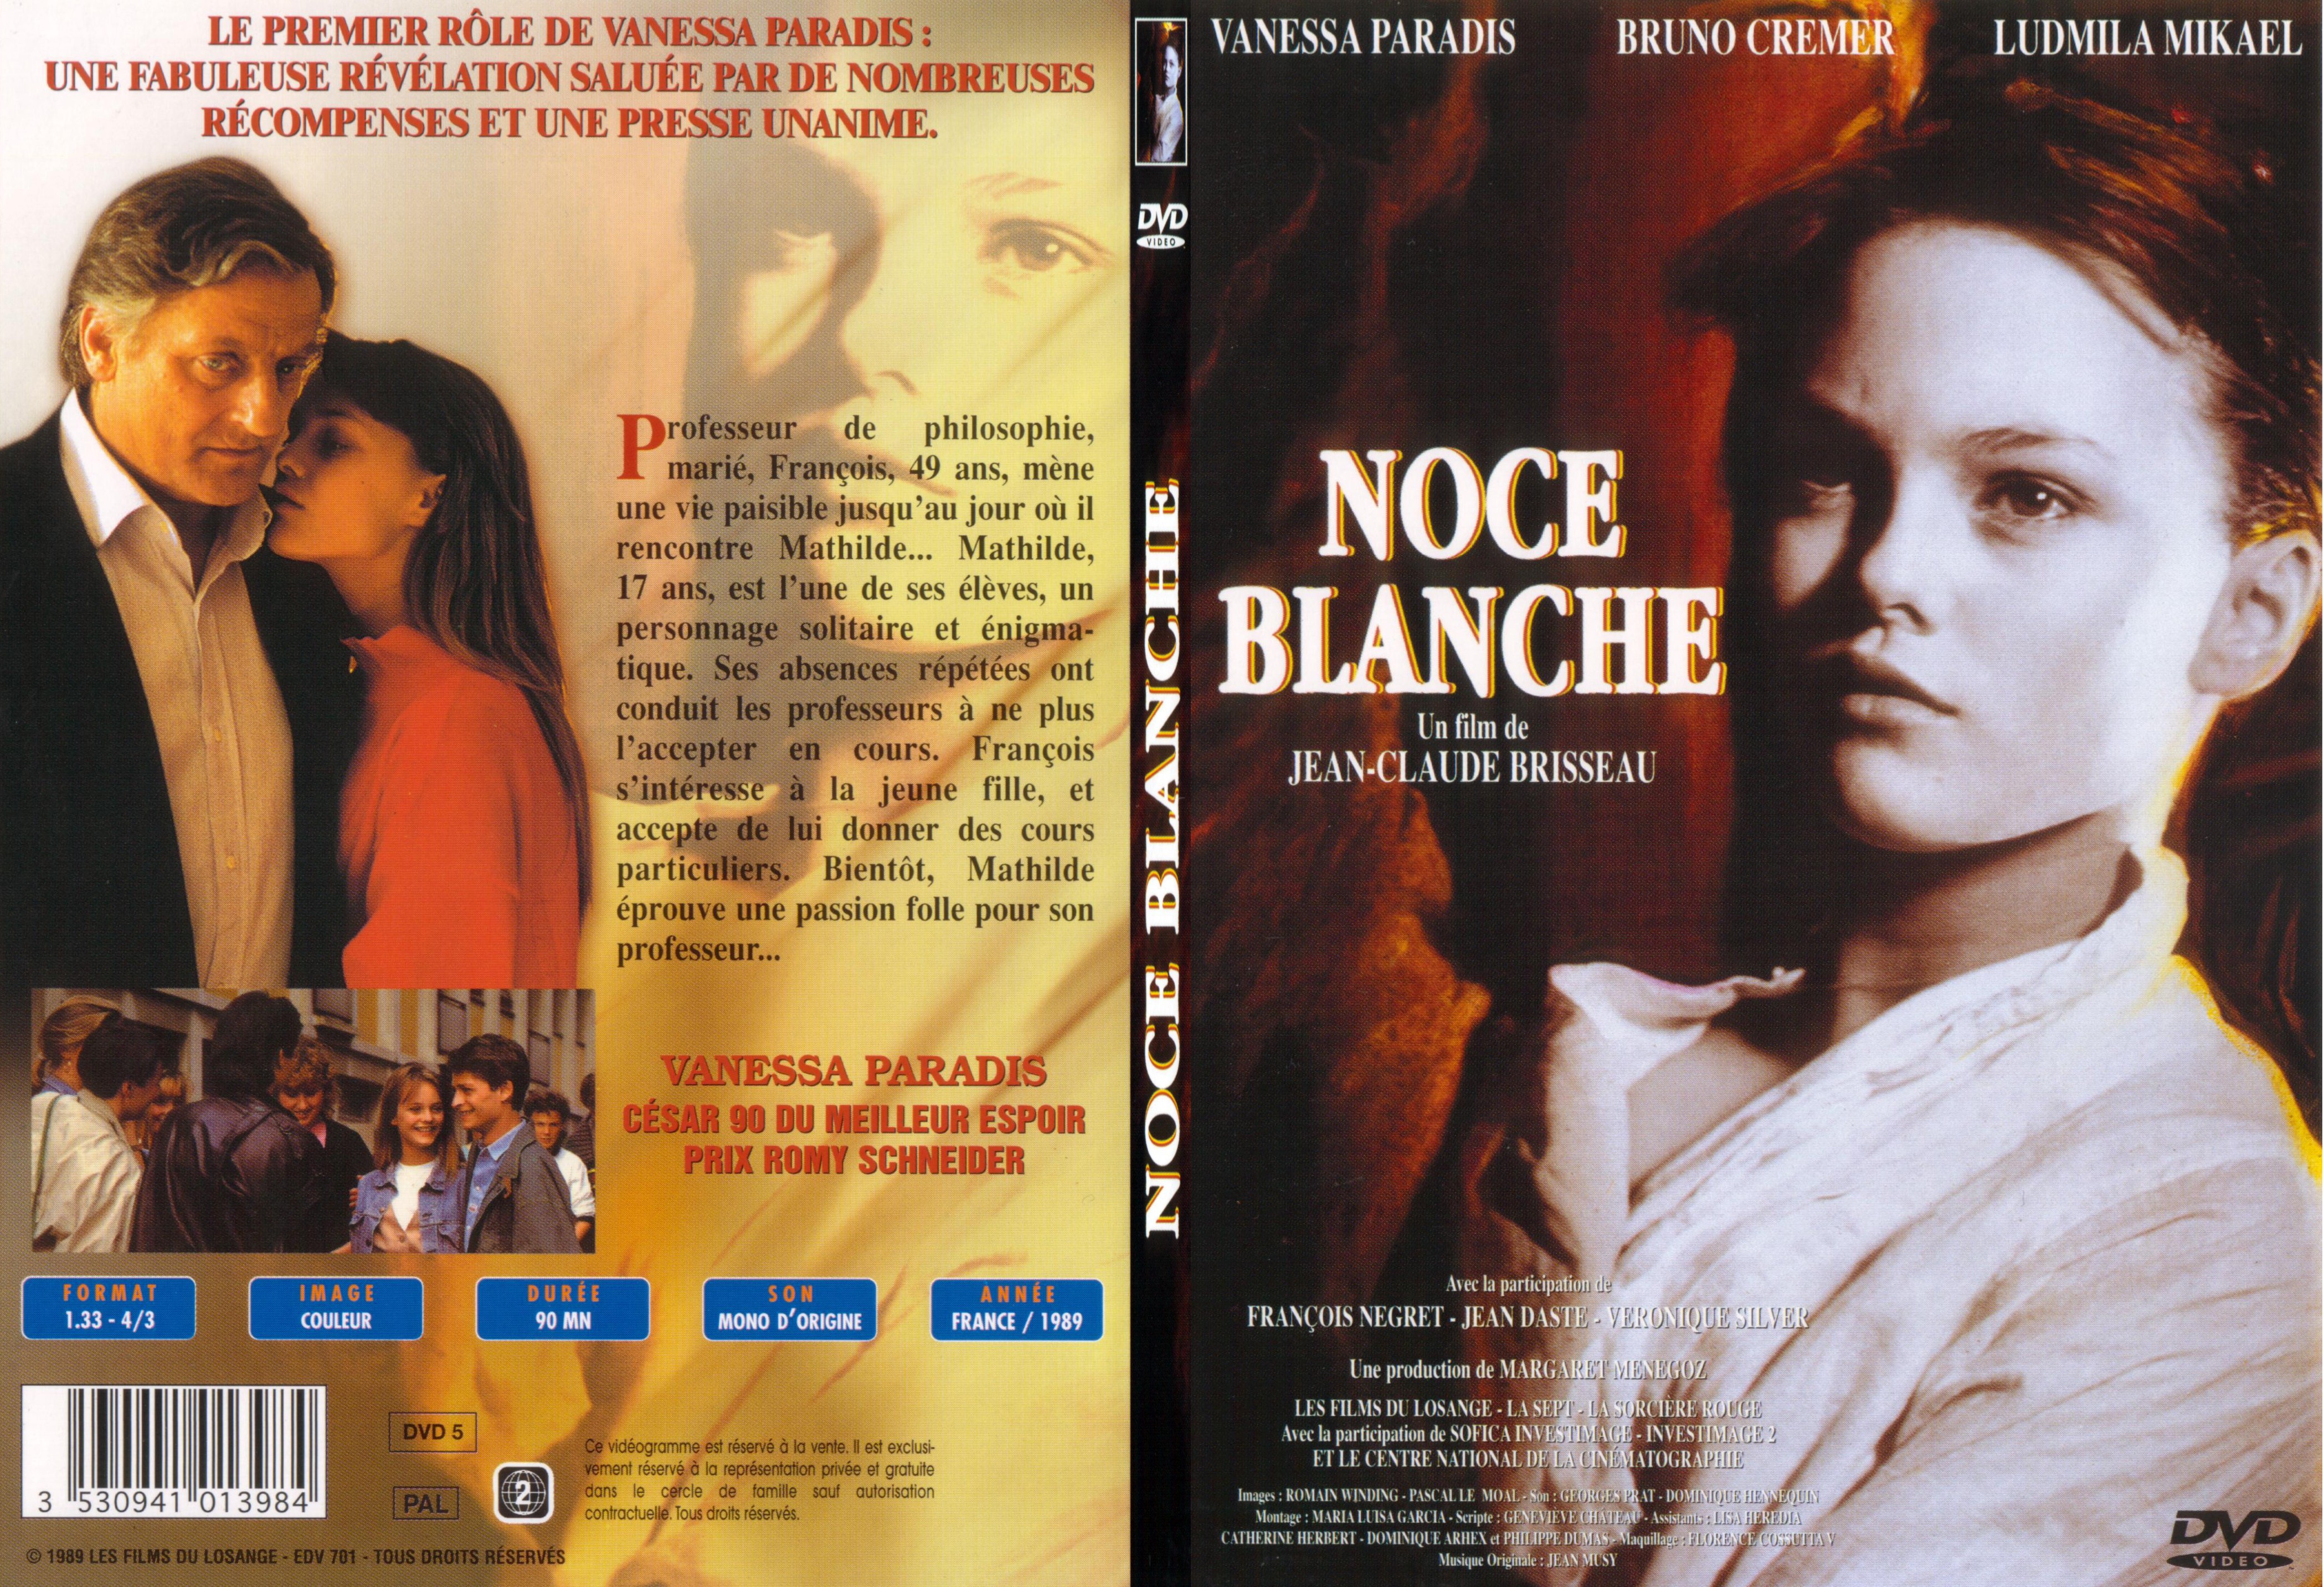 Jaquette DVD Noce blanche - SLIM